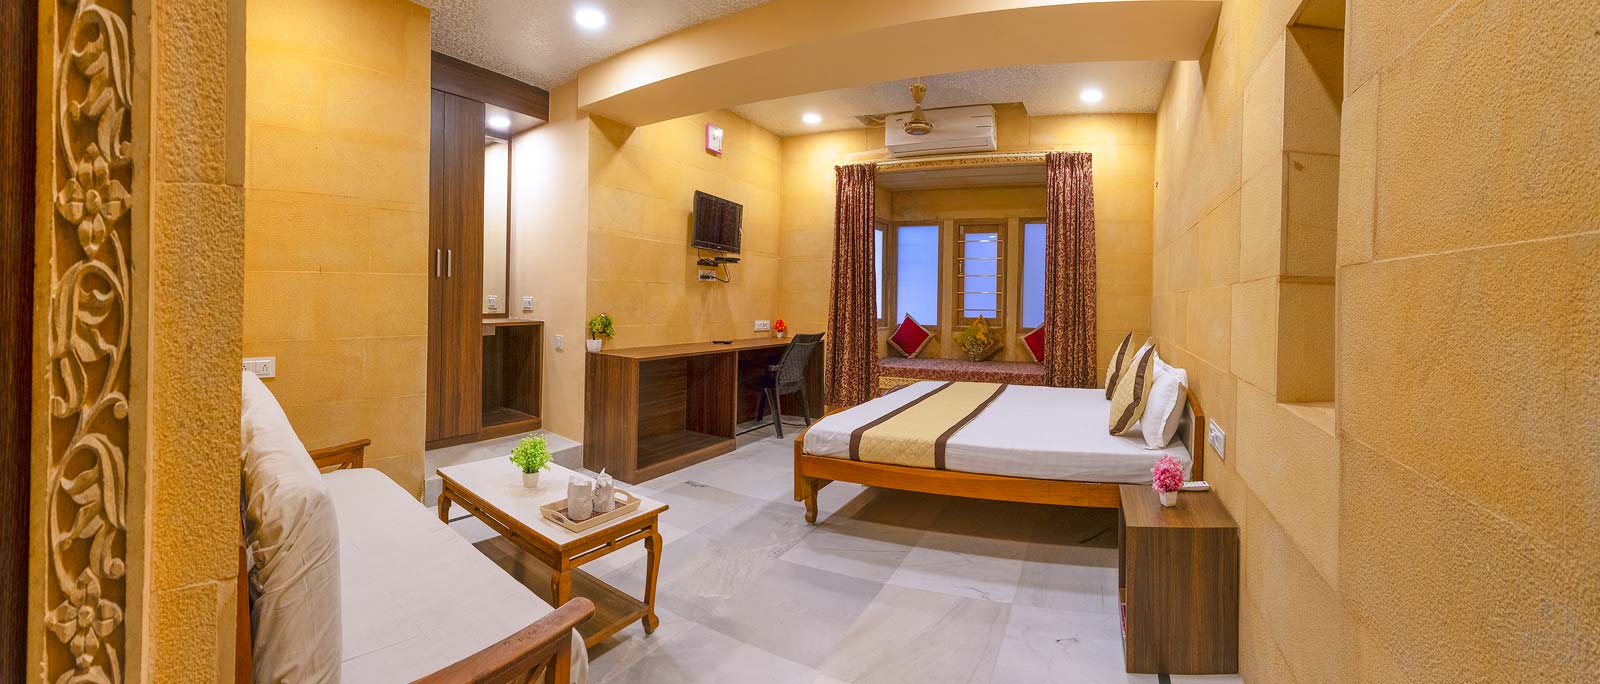 hotel-akashdeep-jaisalmer-banner-2